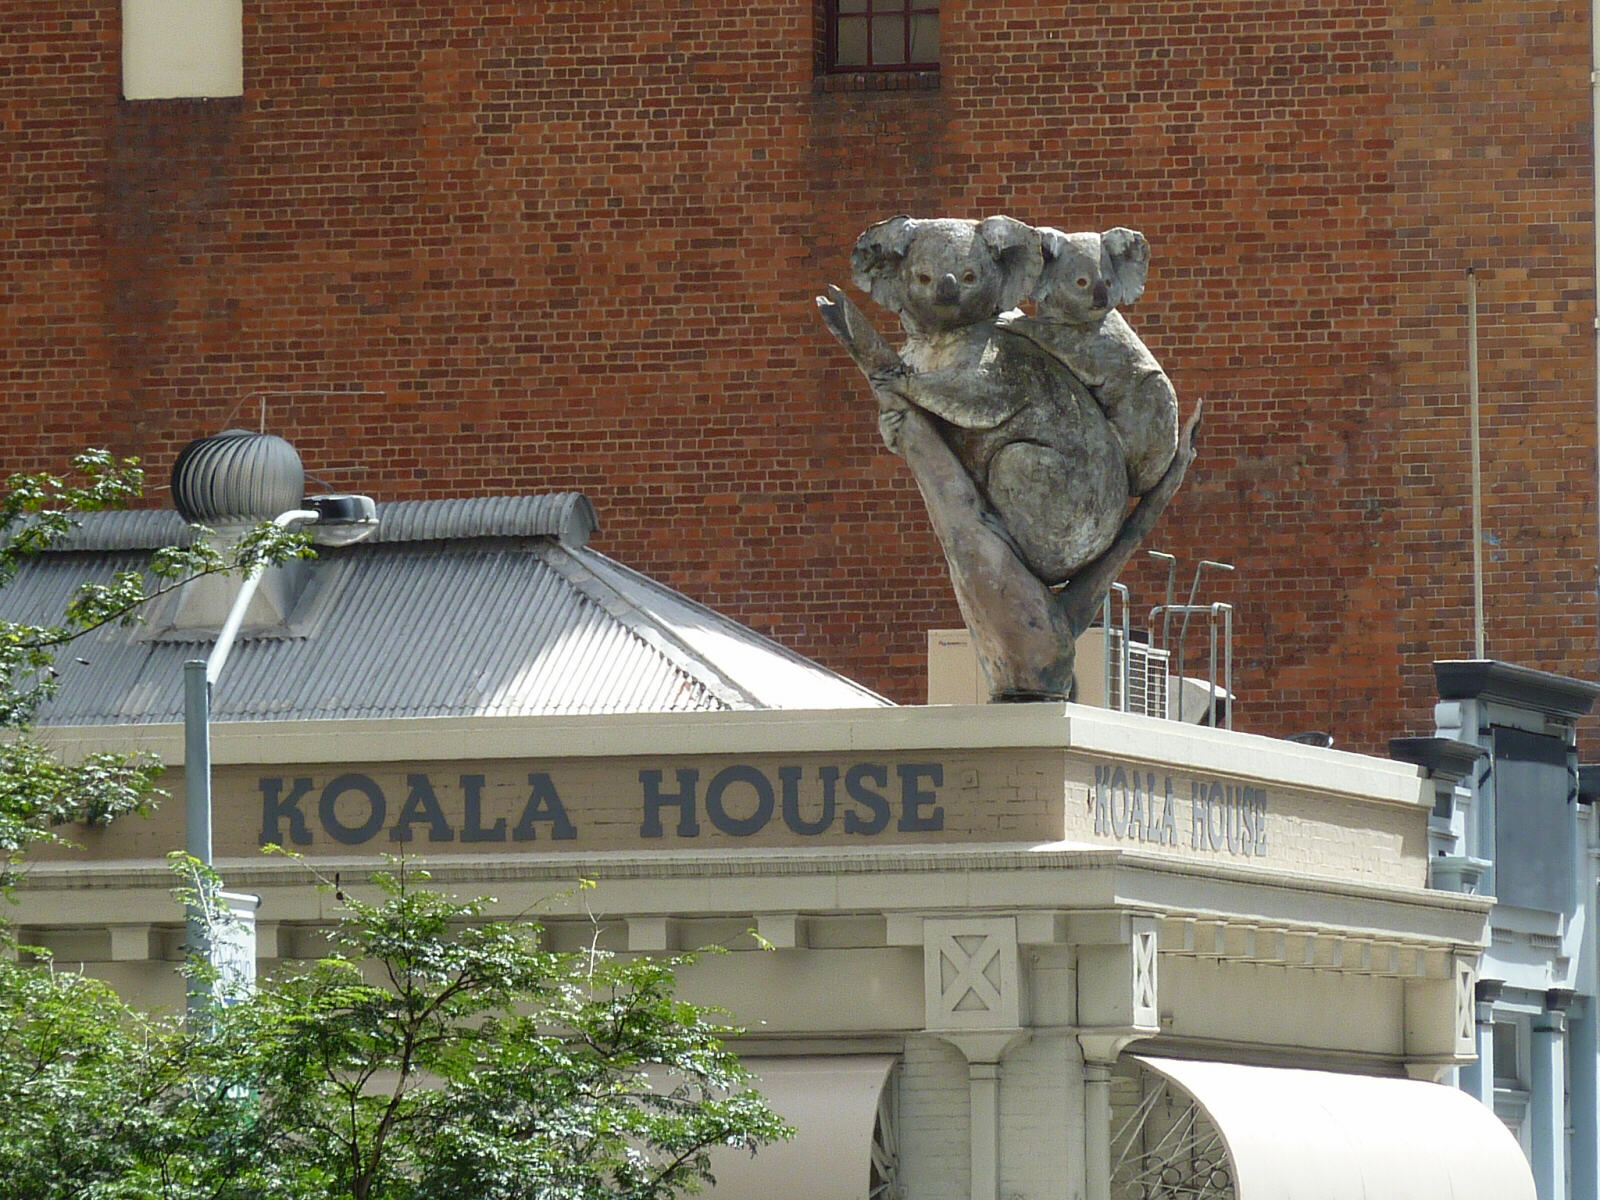 The Koala House near the waterfront in Brisbane